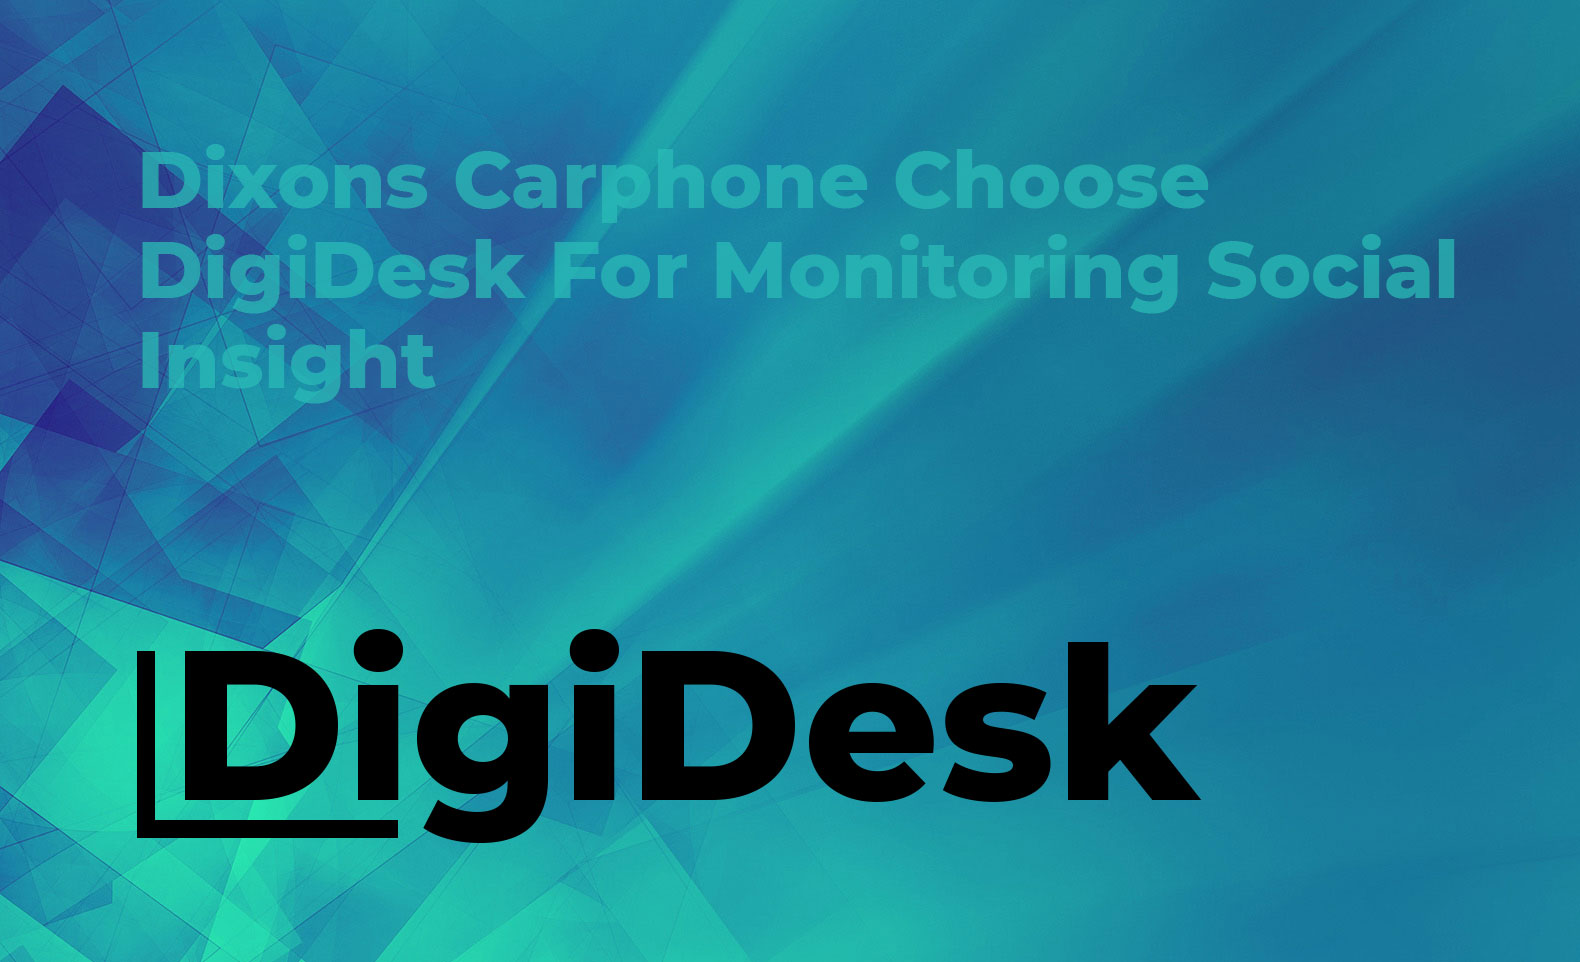 Dixons Carphone Choose DigiDesk For Monitoring Social Insight